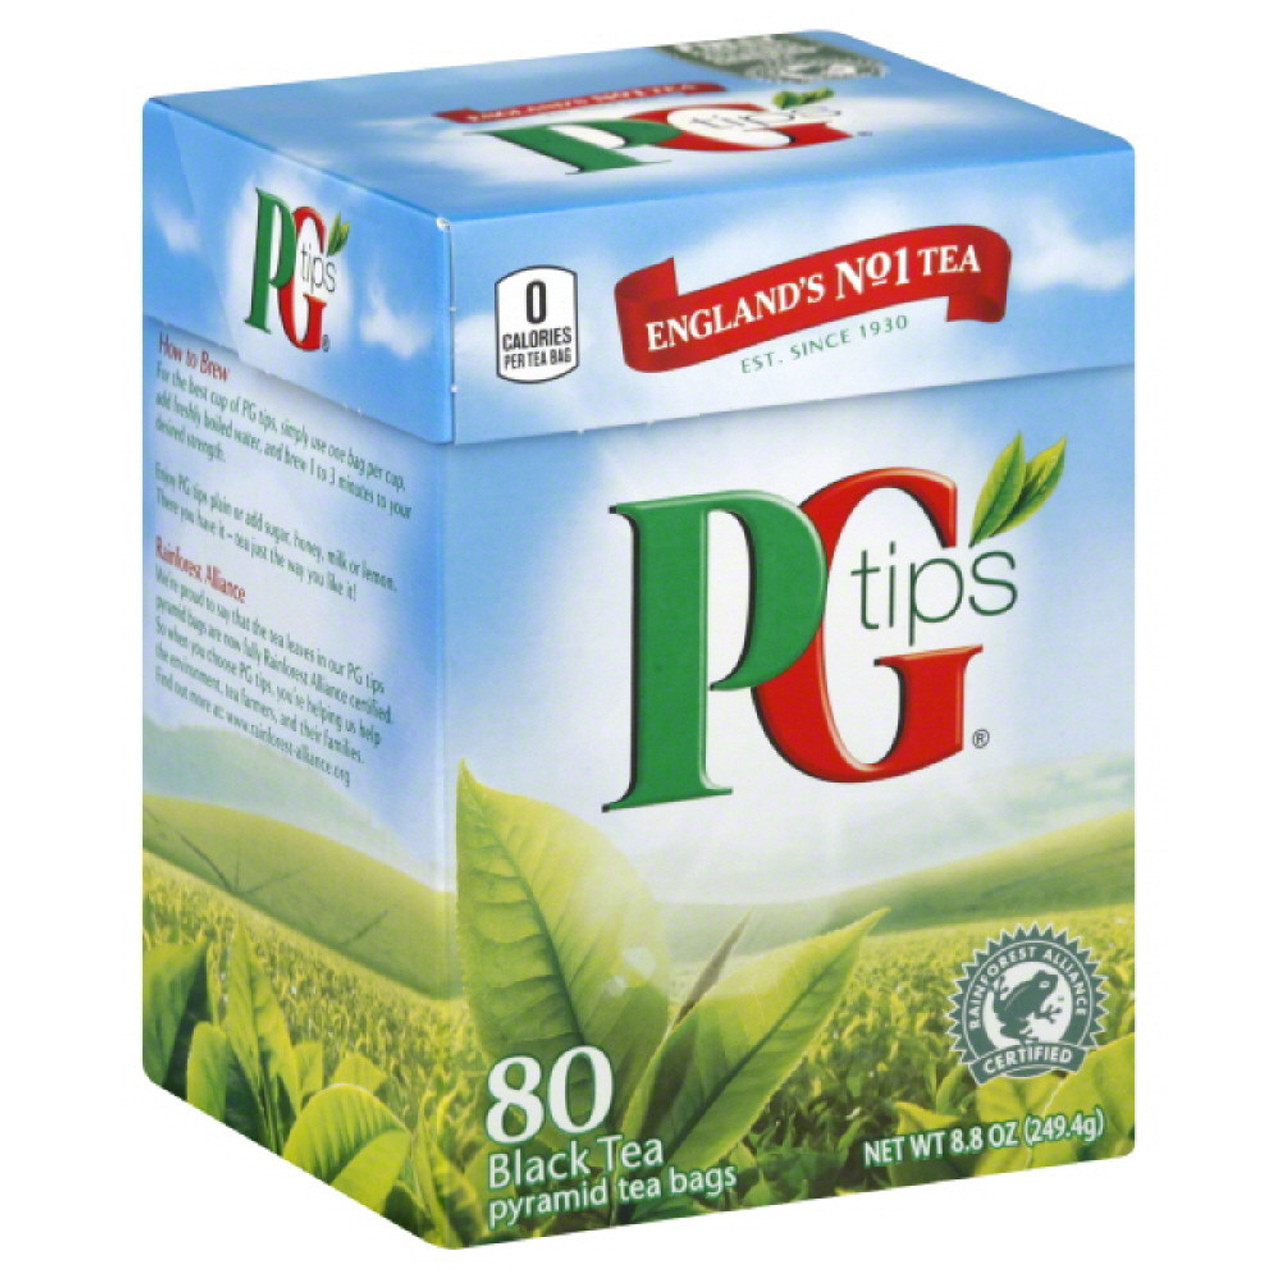 Favorite Product: PG Tips Tea